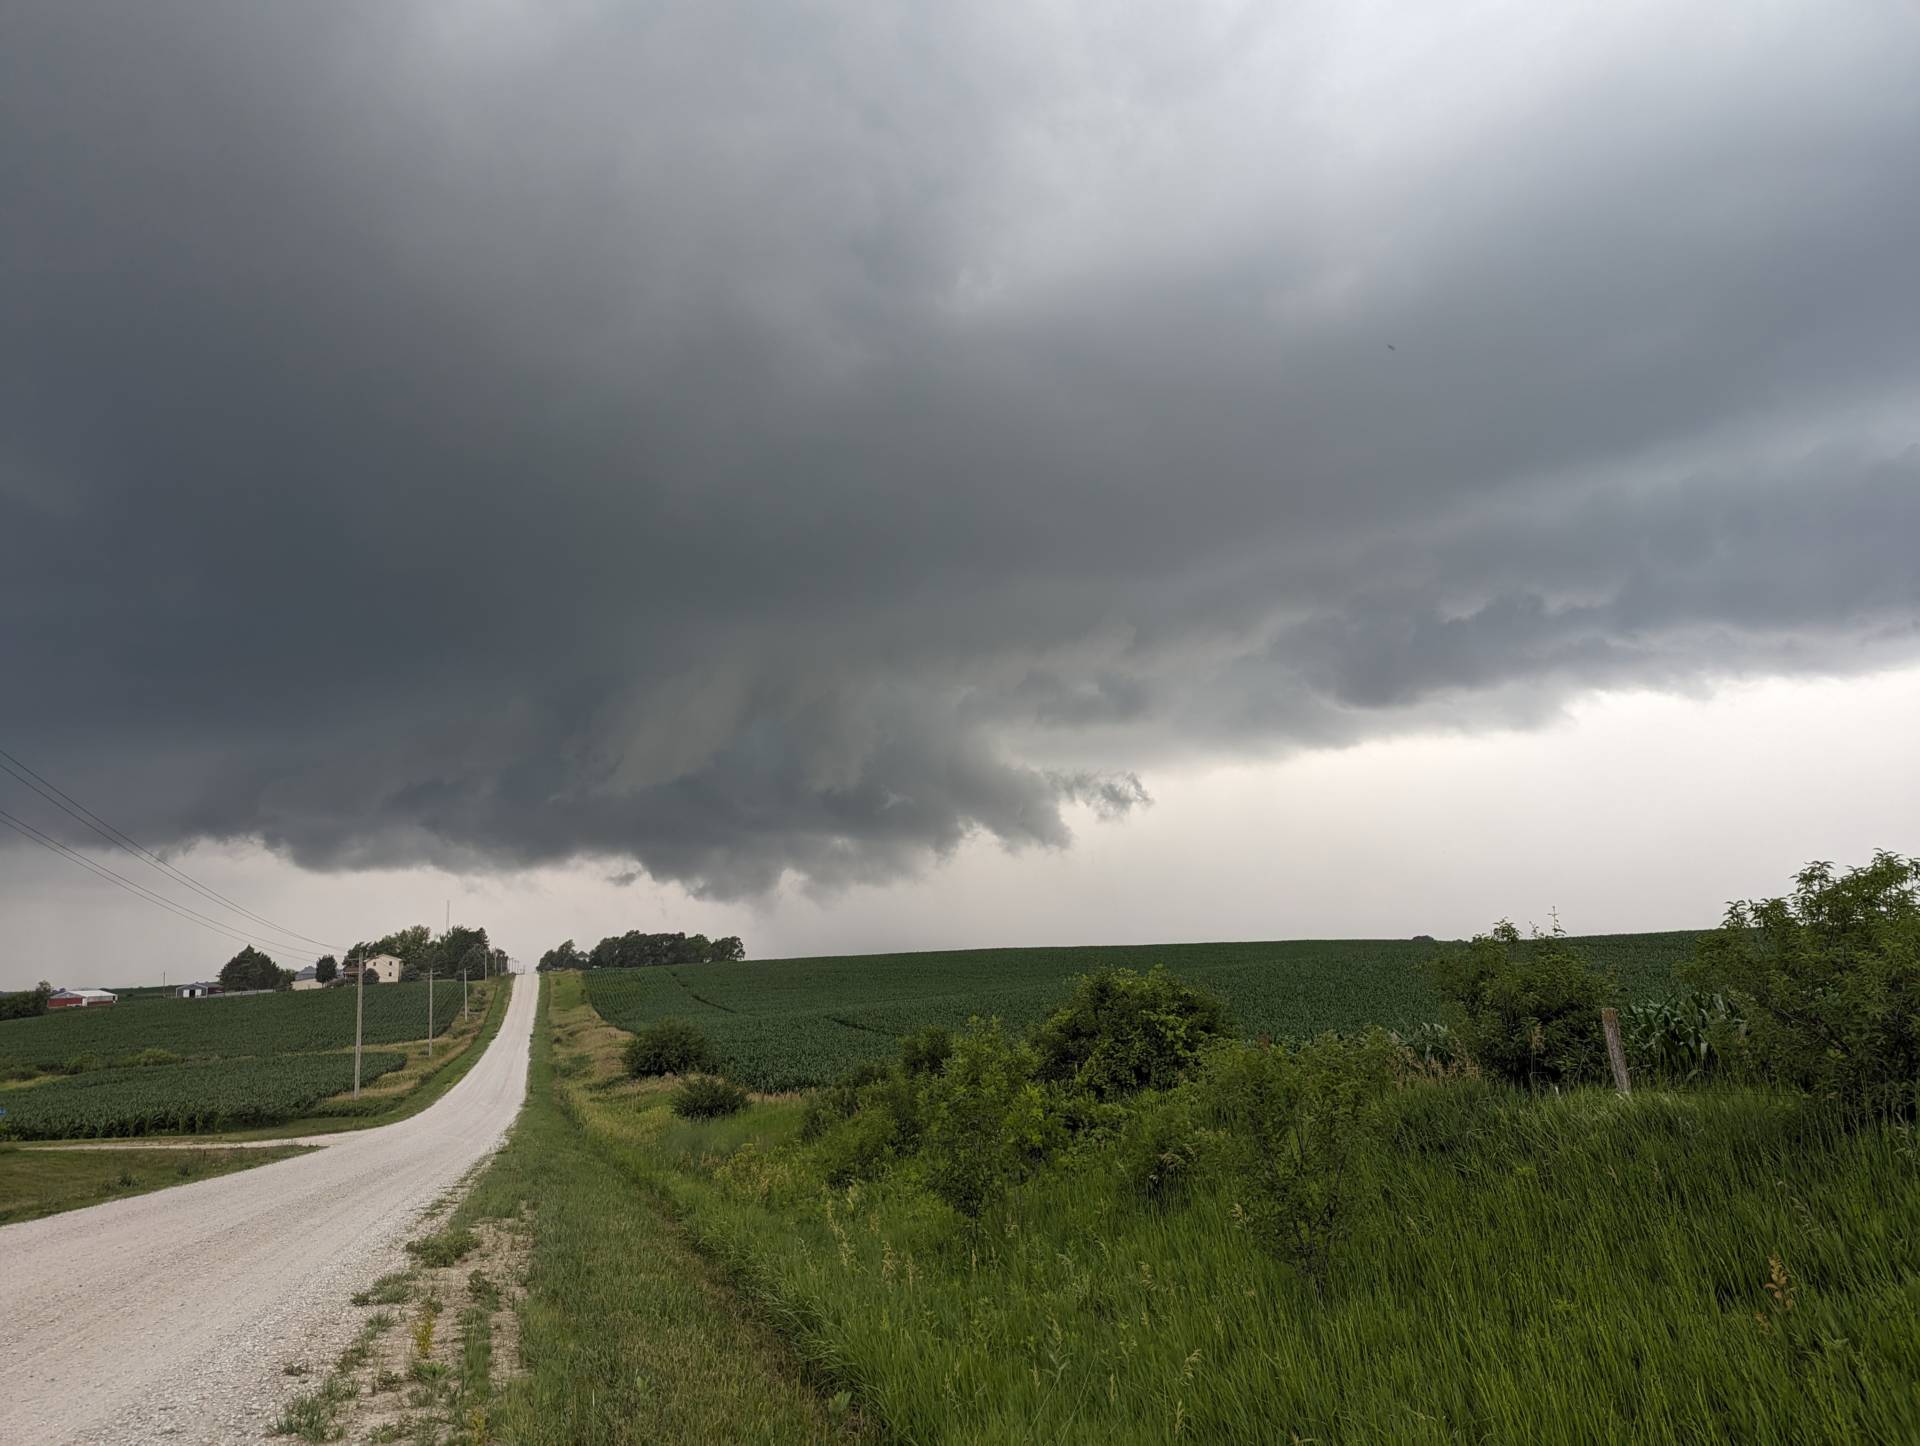 Severe storm rolling over Wiota, Iowa. @NWSDesMoines #iawx